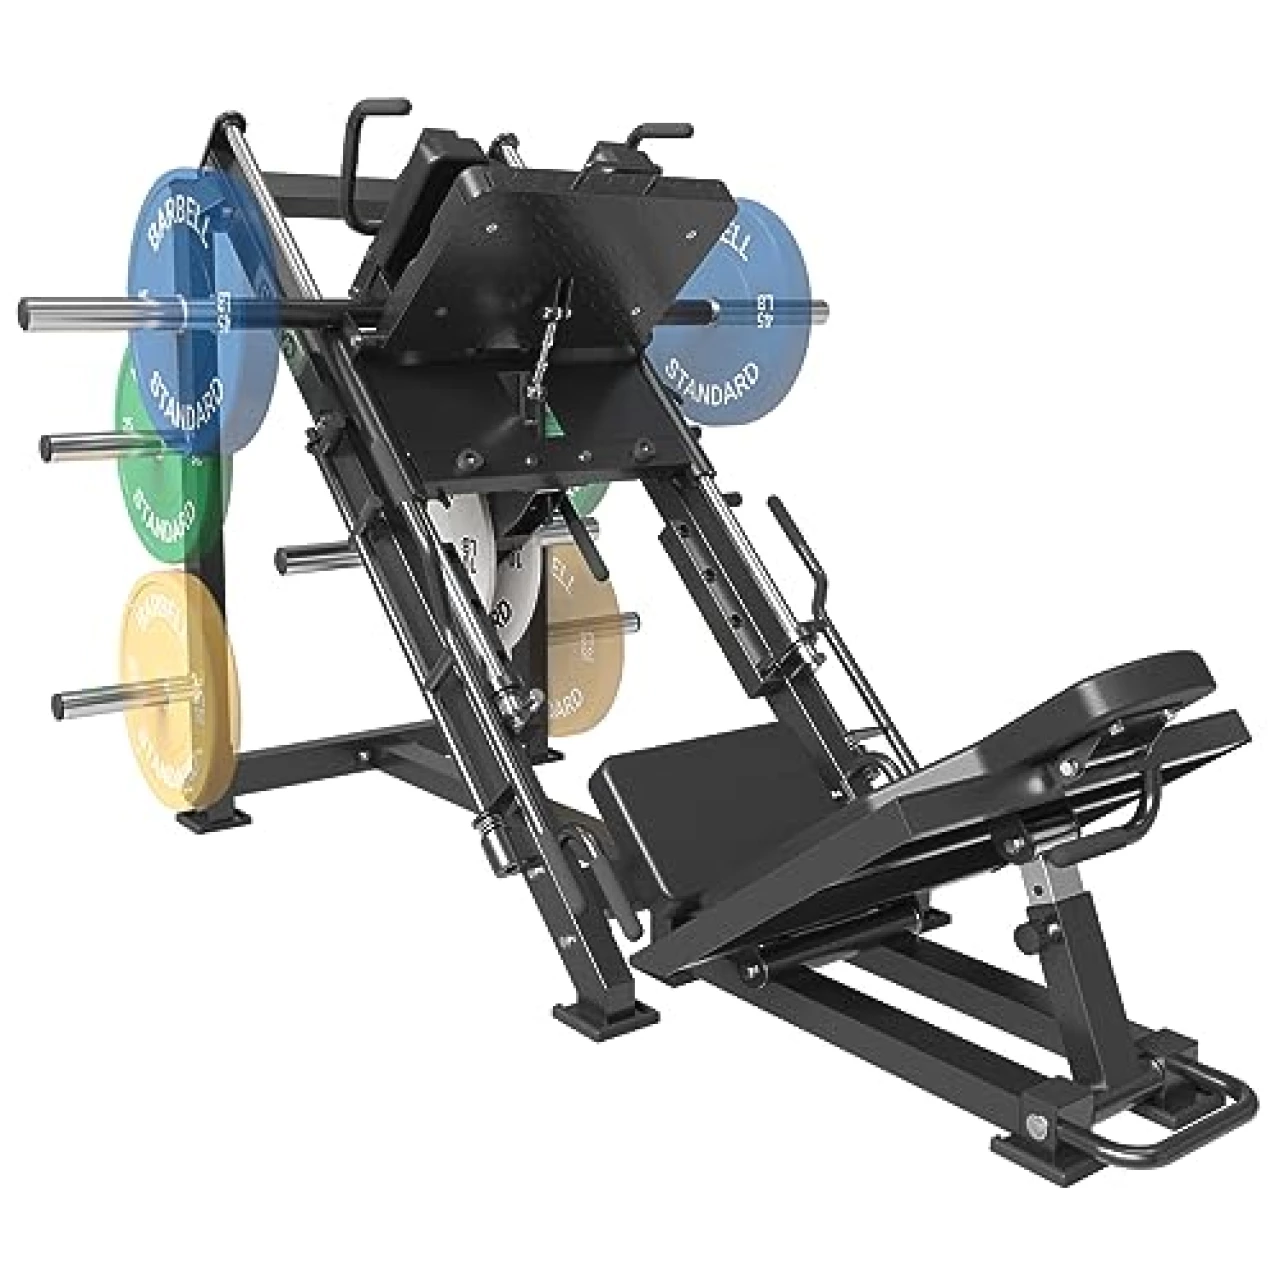 GMWD Leg Press Machine, Leg Press Hack Squat Combo with Linear Bearing, 2000lb Weight Capacity